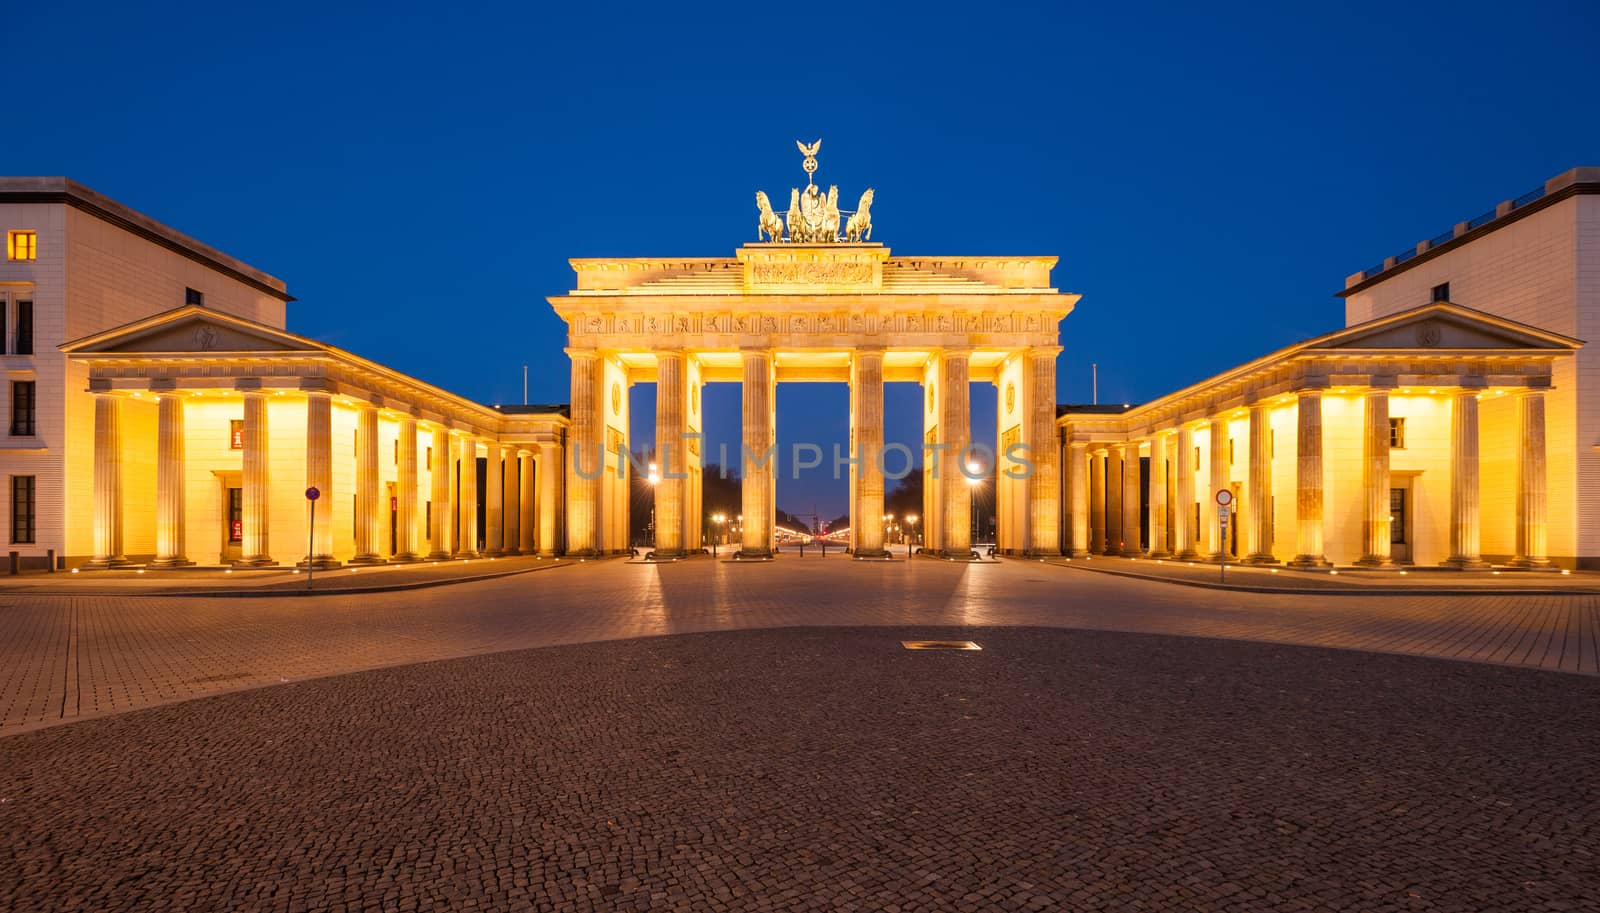 Berlin's Brandenburg Gate (Brandenburger Tor) at dusk